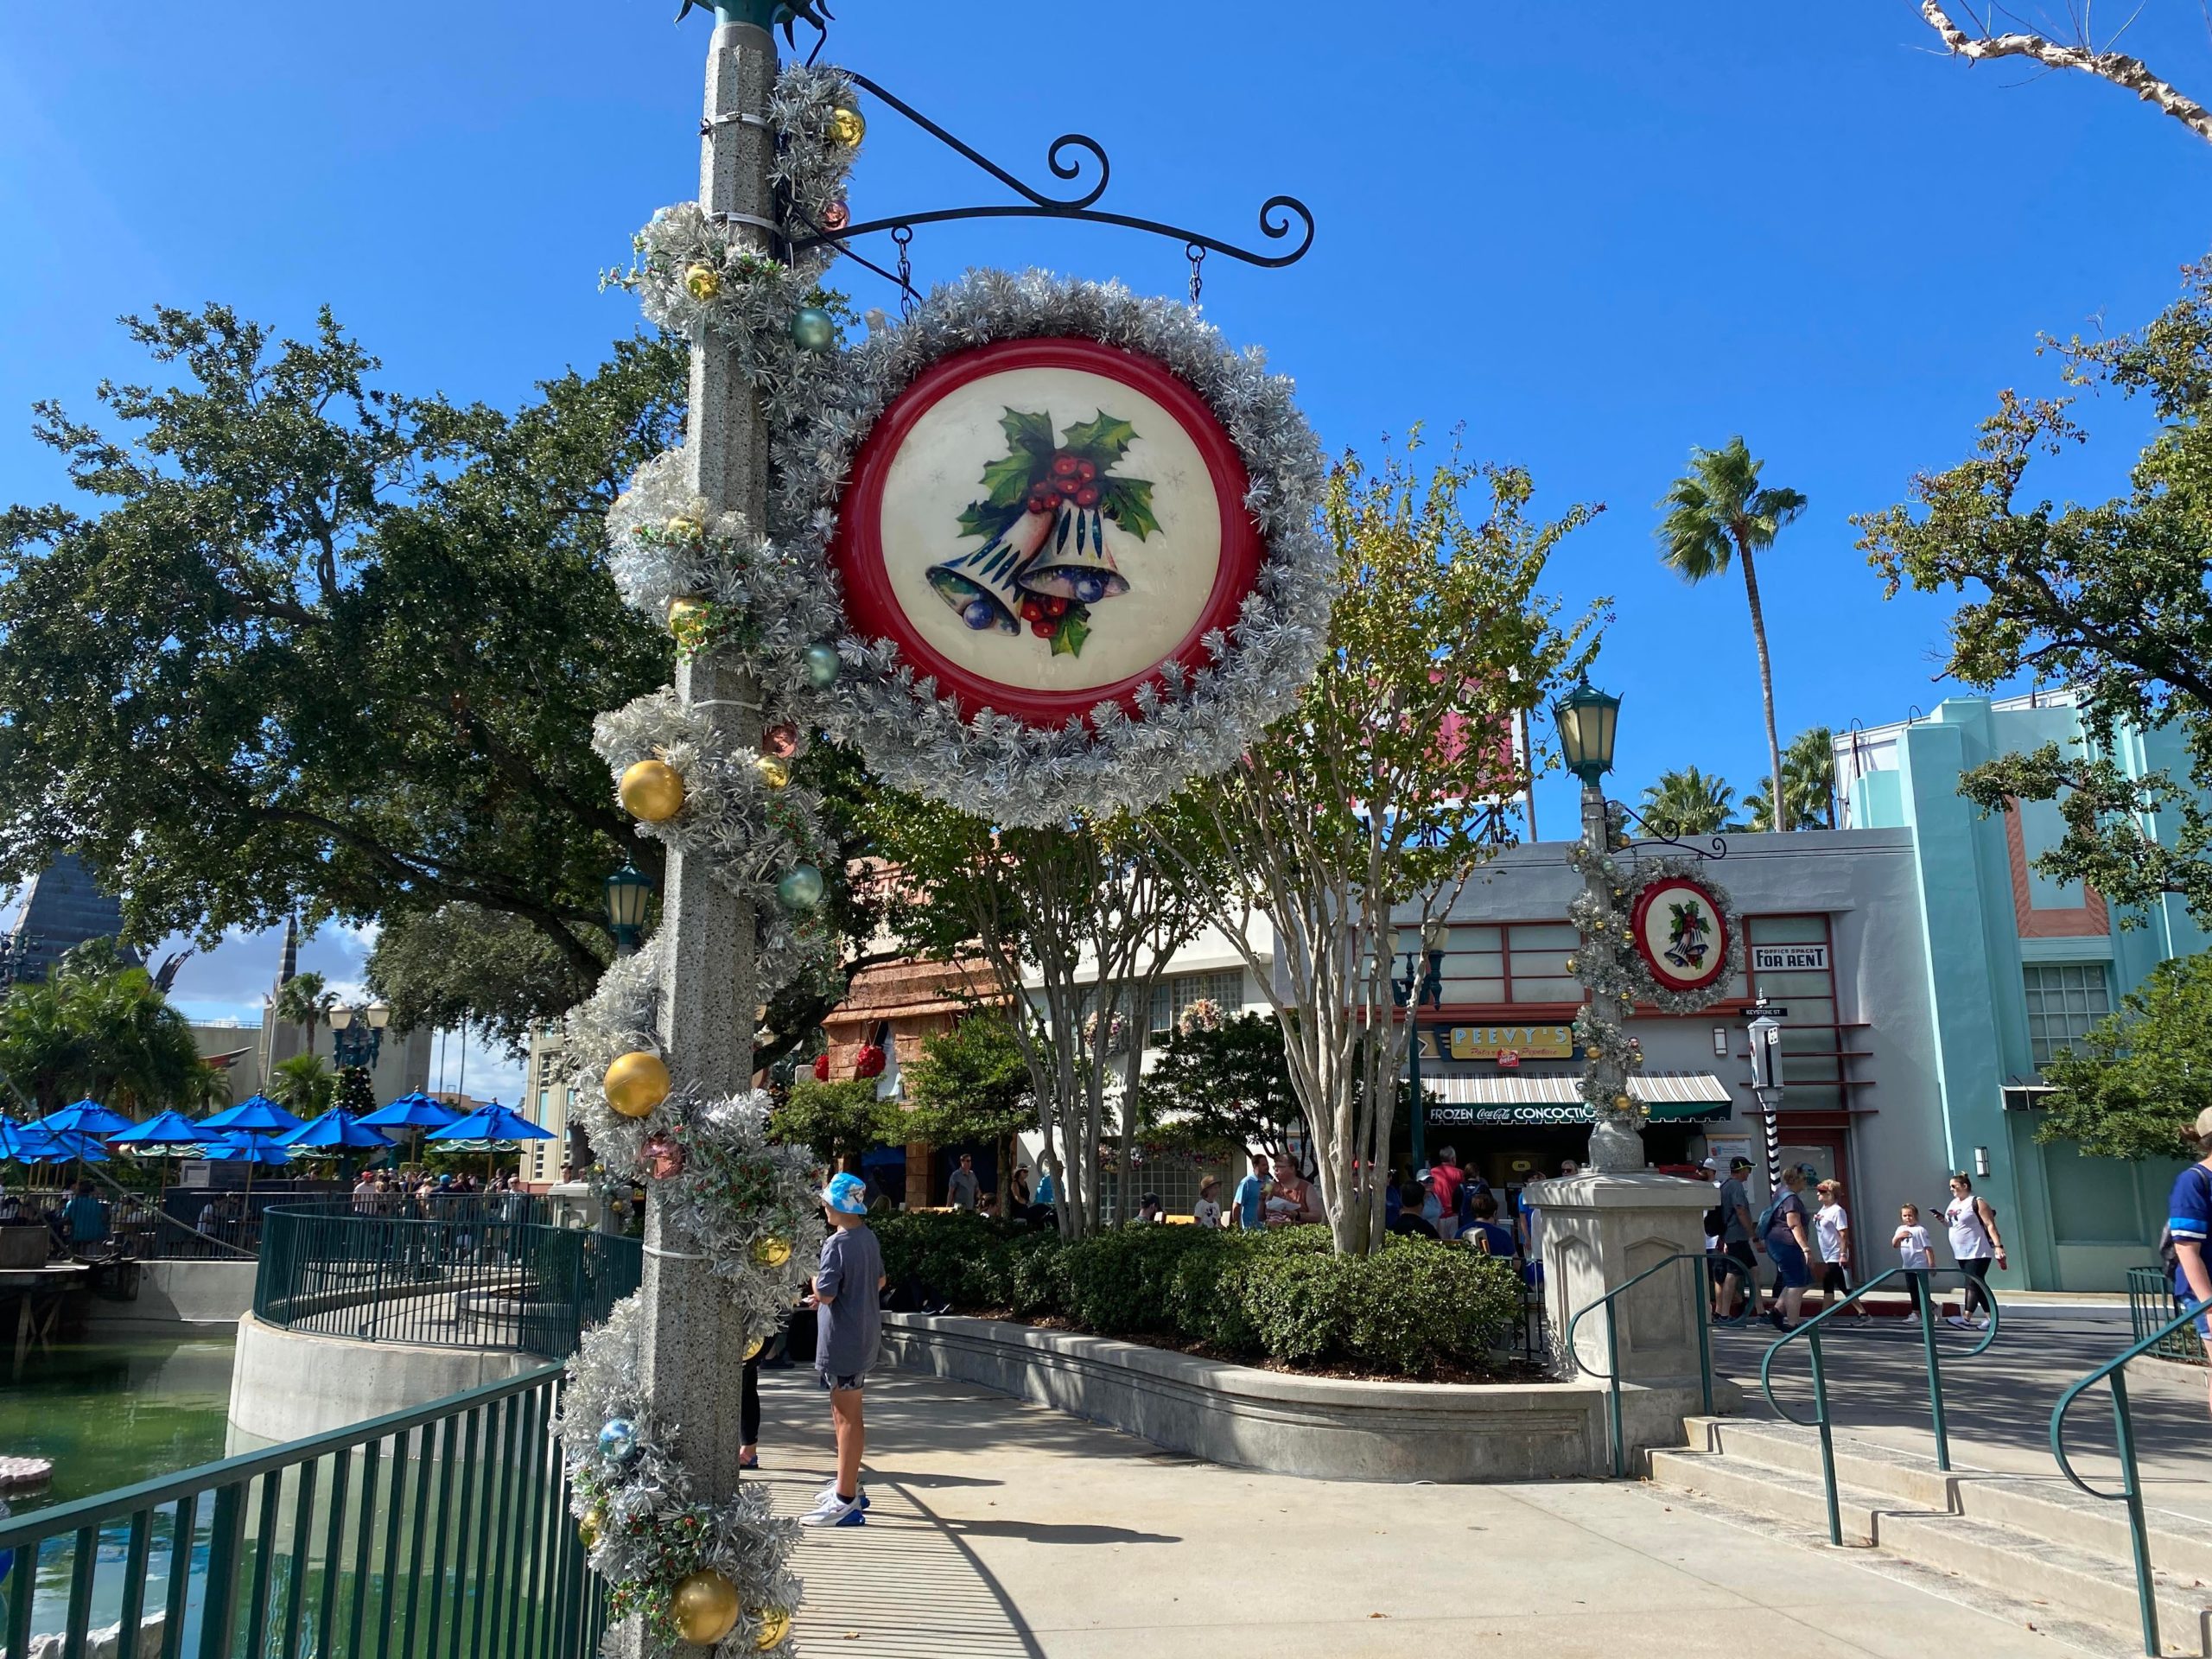 Disney's Hollywood Studios Holidays